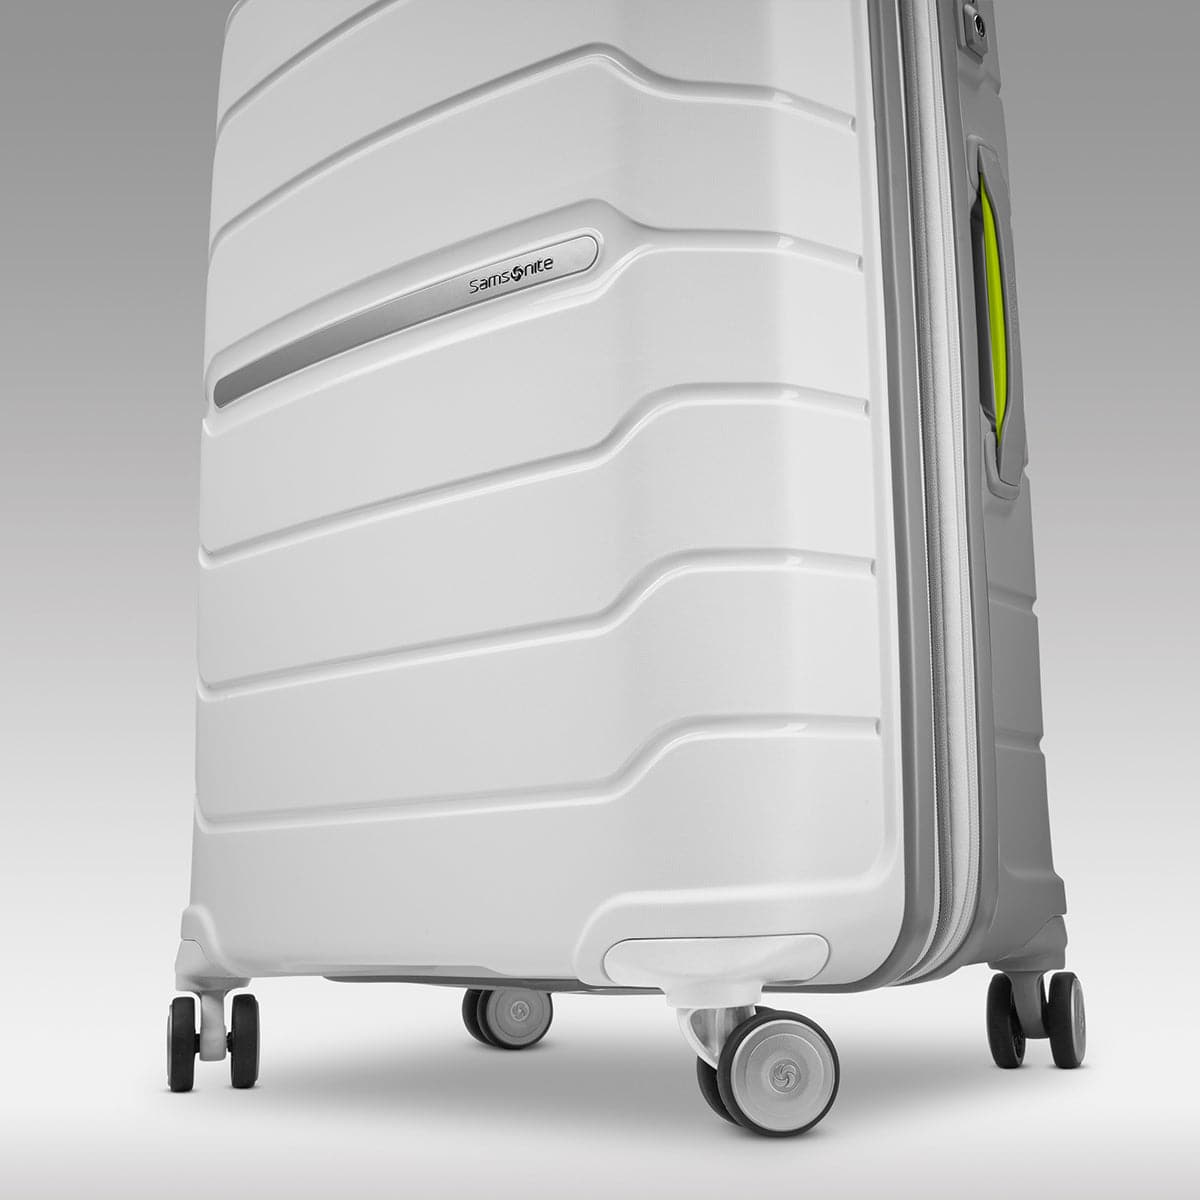 Samsonite Freeform 28" Large Hardside Spinner Luggage